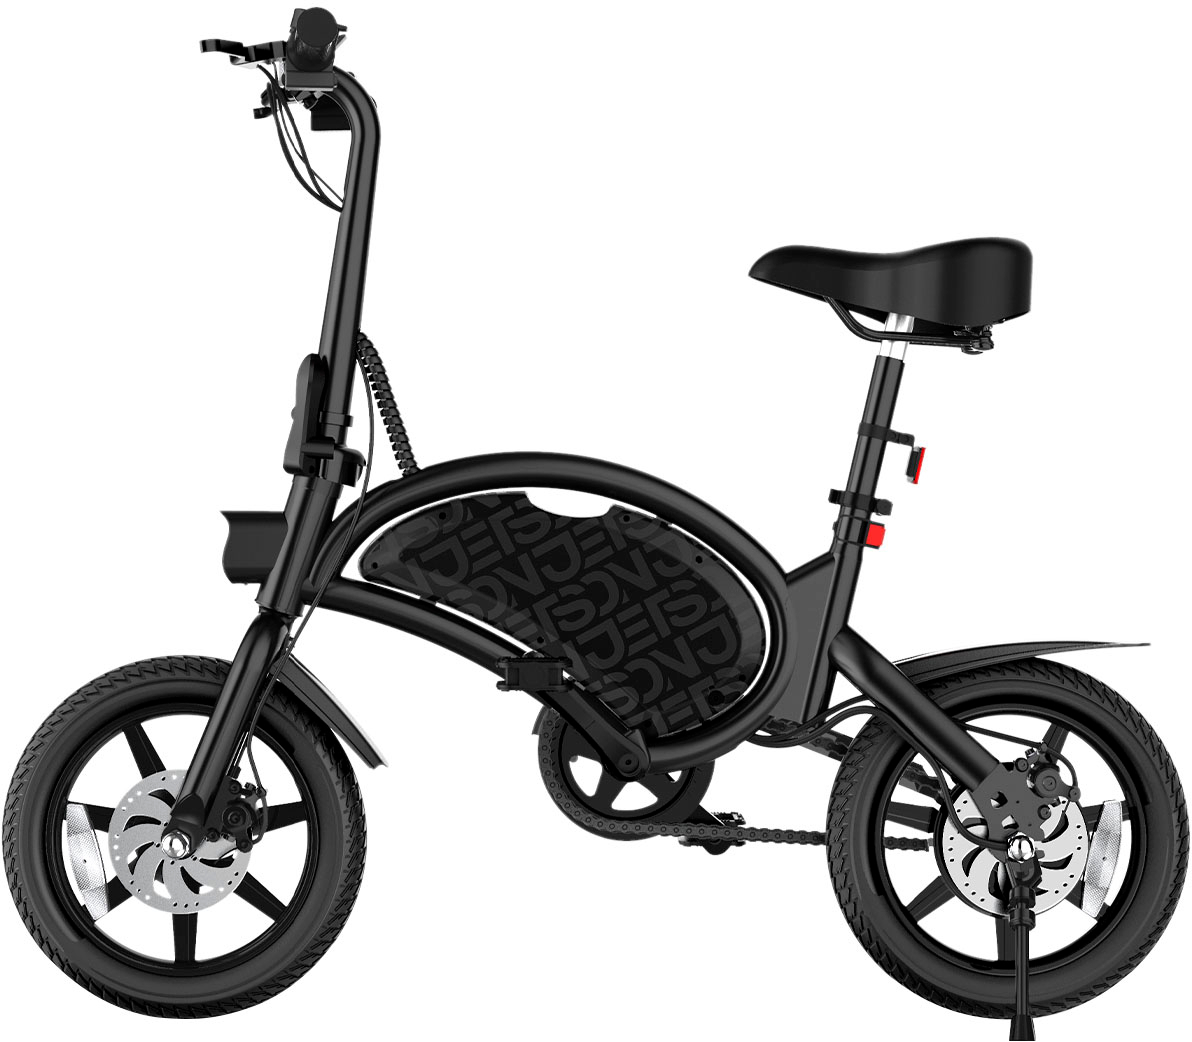 Angle View: Razor Dirt Rocket MX125 - Blue, Miniature Electric Powered Ride-on Bike, for Kids 7+